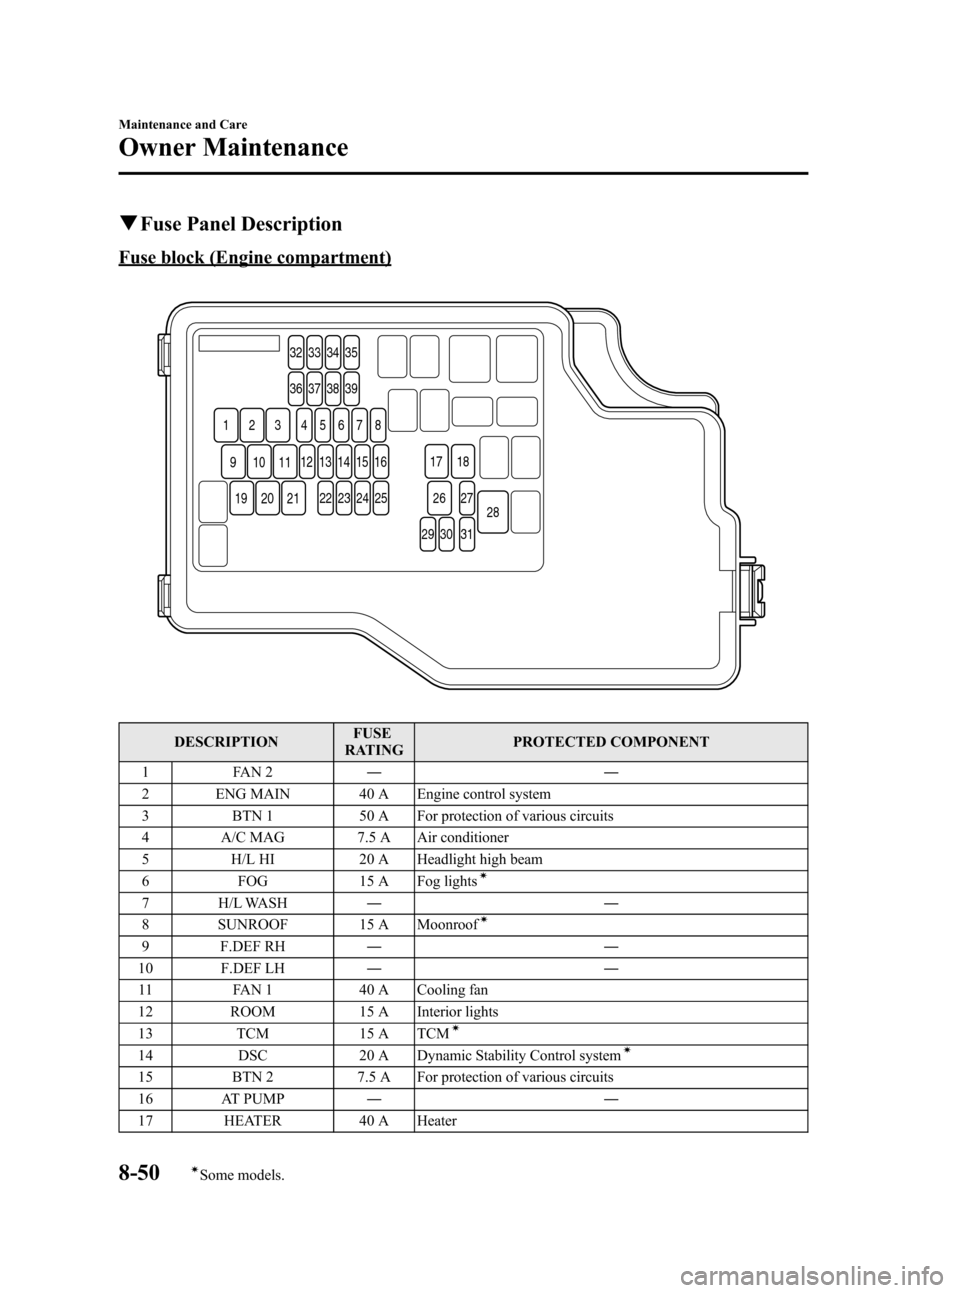 MAZDA MODEL 3 HATCHBACK 2010  Owners Manual (in English) Black plate (414,1)
qFuse Panel Description
Fuse block (Engine compartment)
32 33 34 35
36 37 38 39
5 4 1 2 3 678
13 12 14 15 16
22
11 10 9
21 20 19
23 24 25
29 30 3127
28 26 17 18
DESCRIPTIONFUSE
RAT